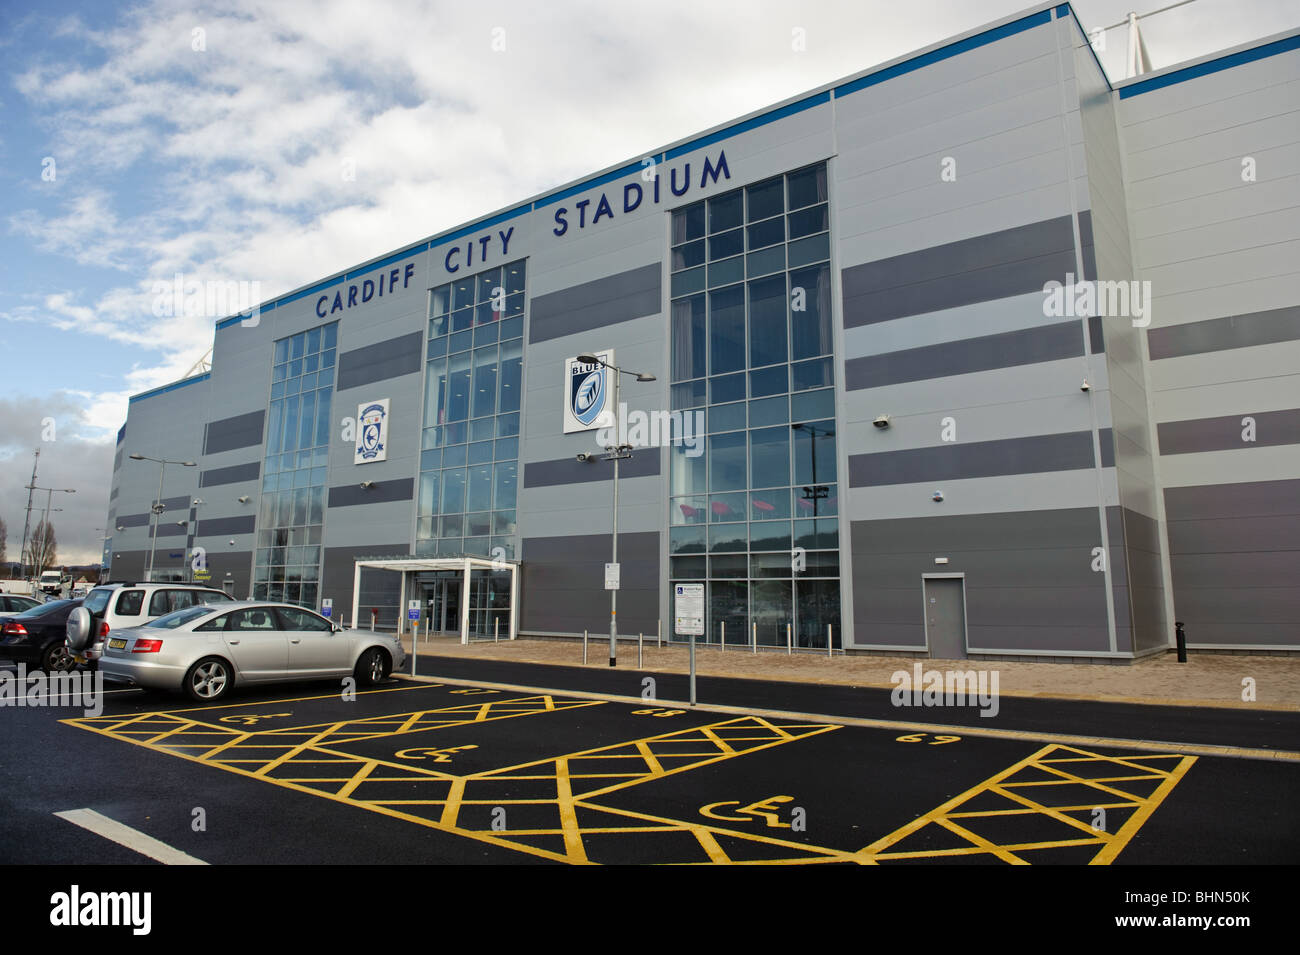 Cardiff City Club neue Fußballstadion, Cardiff Wales UK Stockfoto